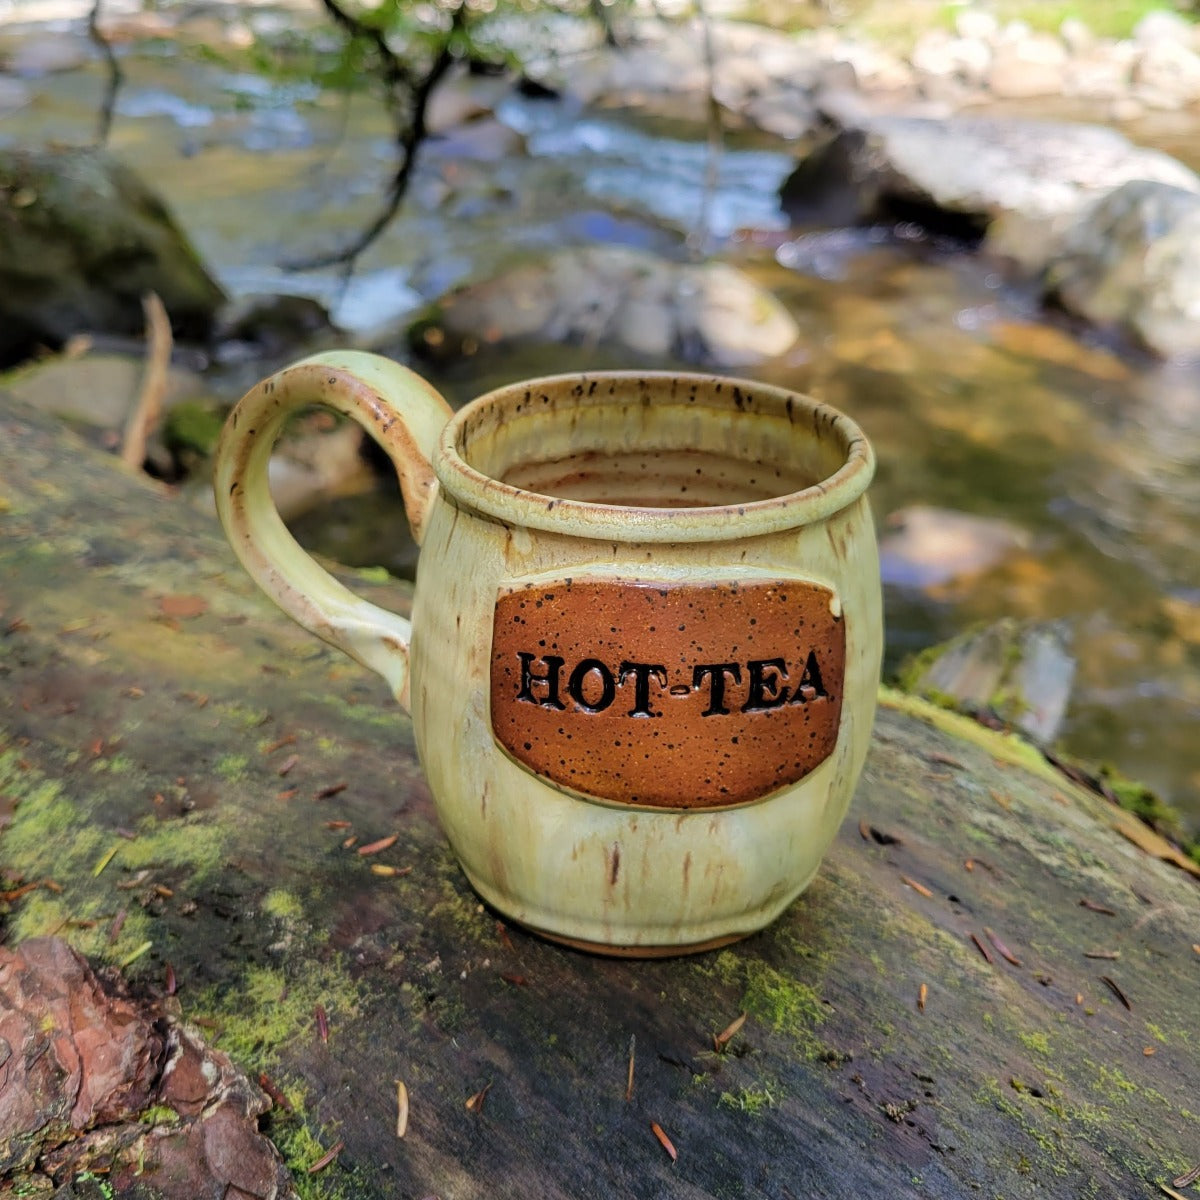 Handmade "HOT-TEA" pottery mug sitting outside on a rock by the river